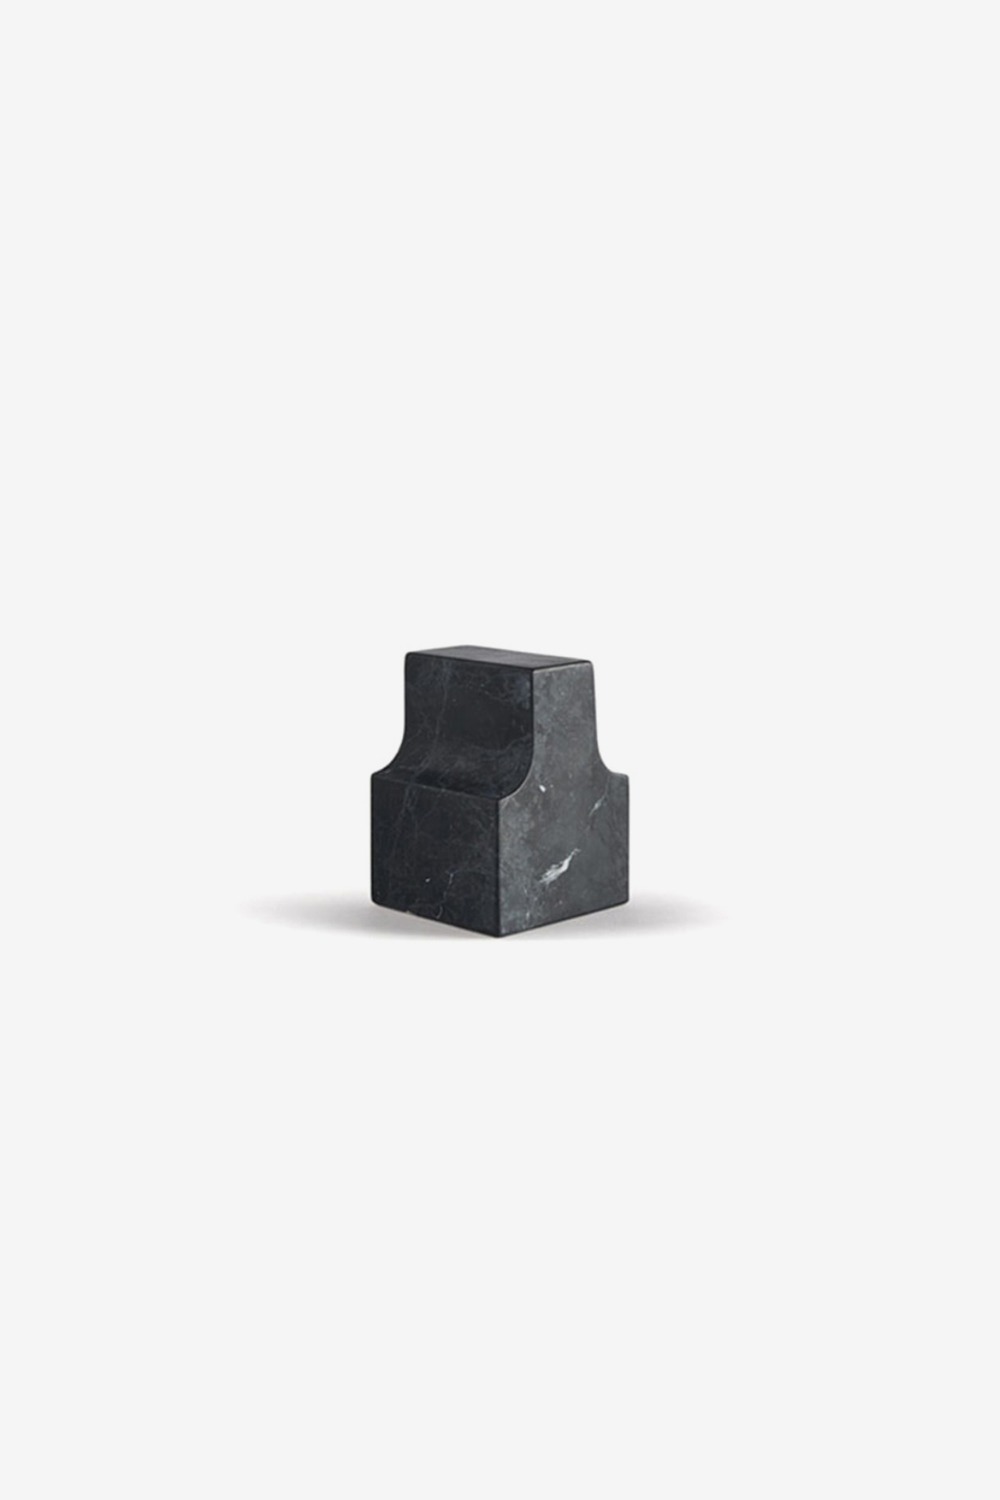 [Atipico] Classico Marble Paperweight / black